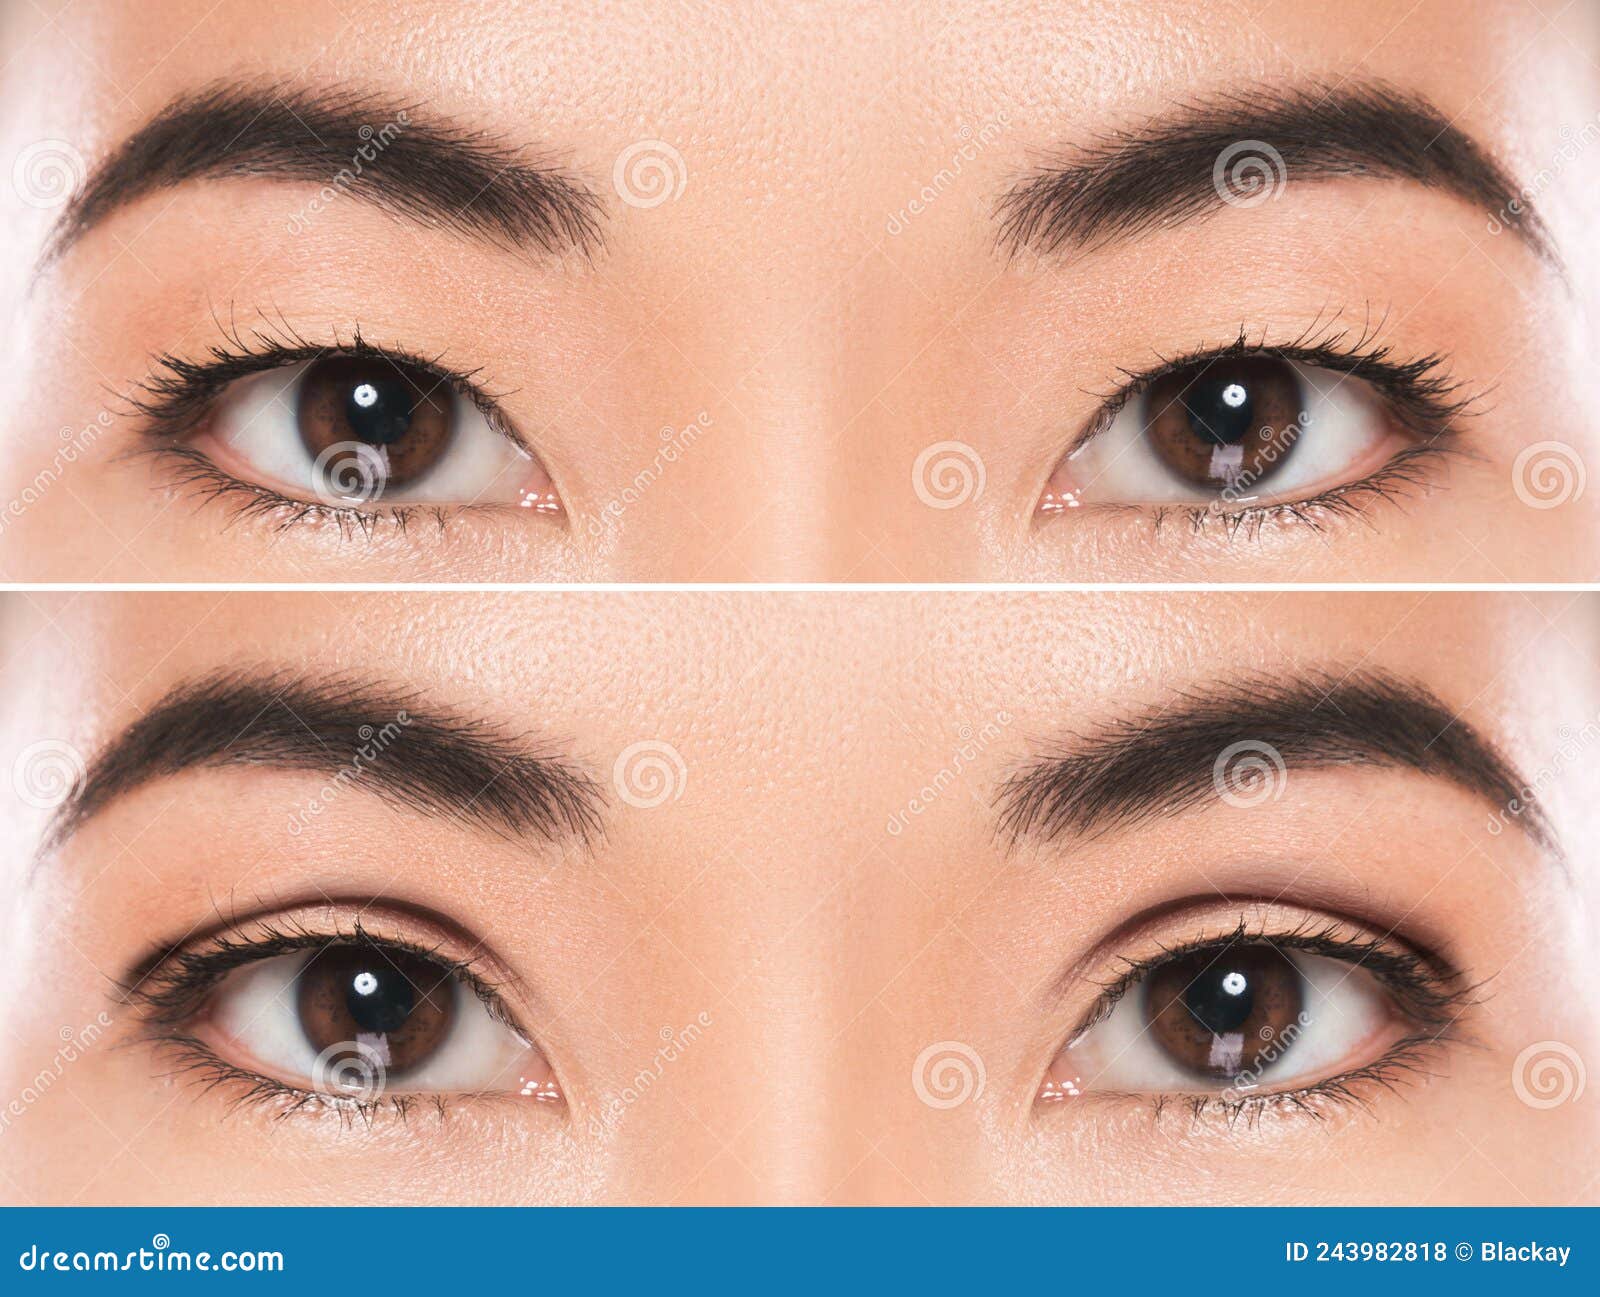 east asian blepharoplasty or double eyelid surgery